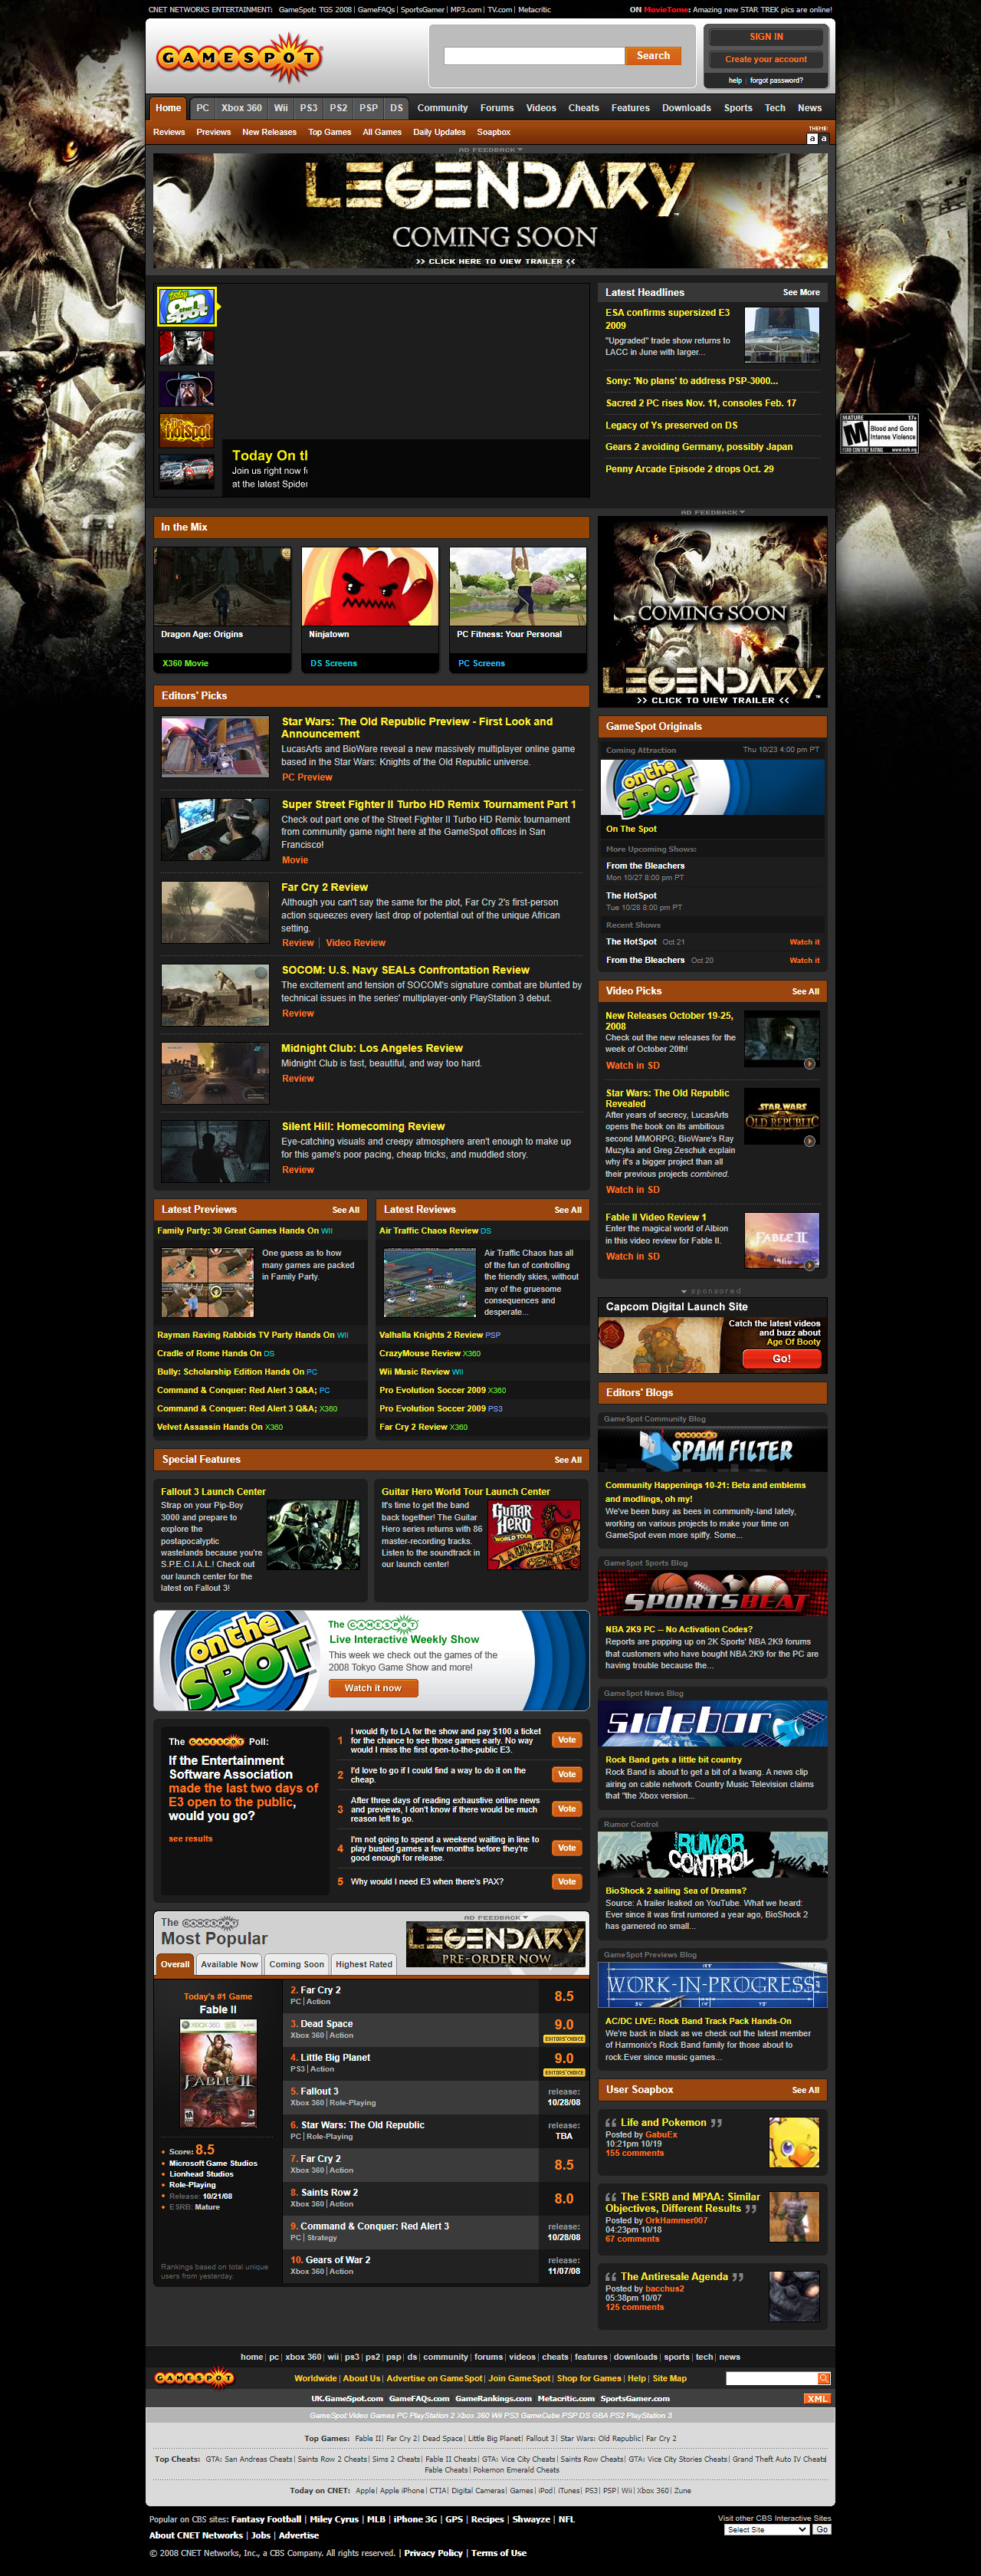 GameSpot in 2008